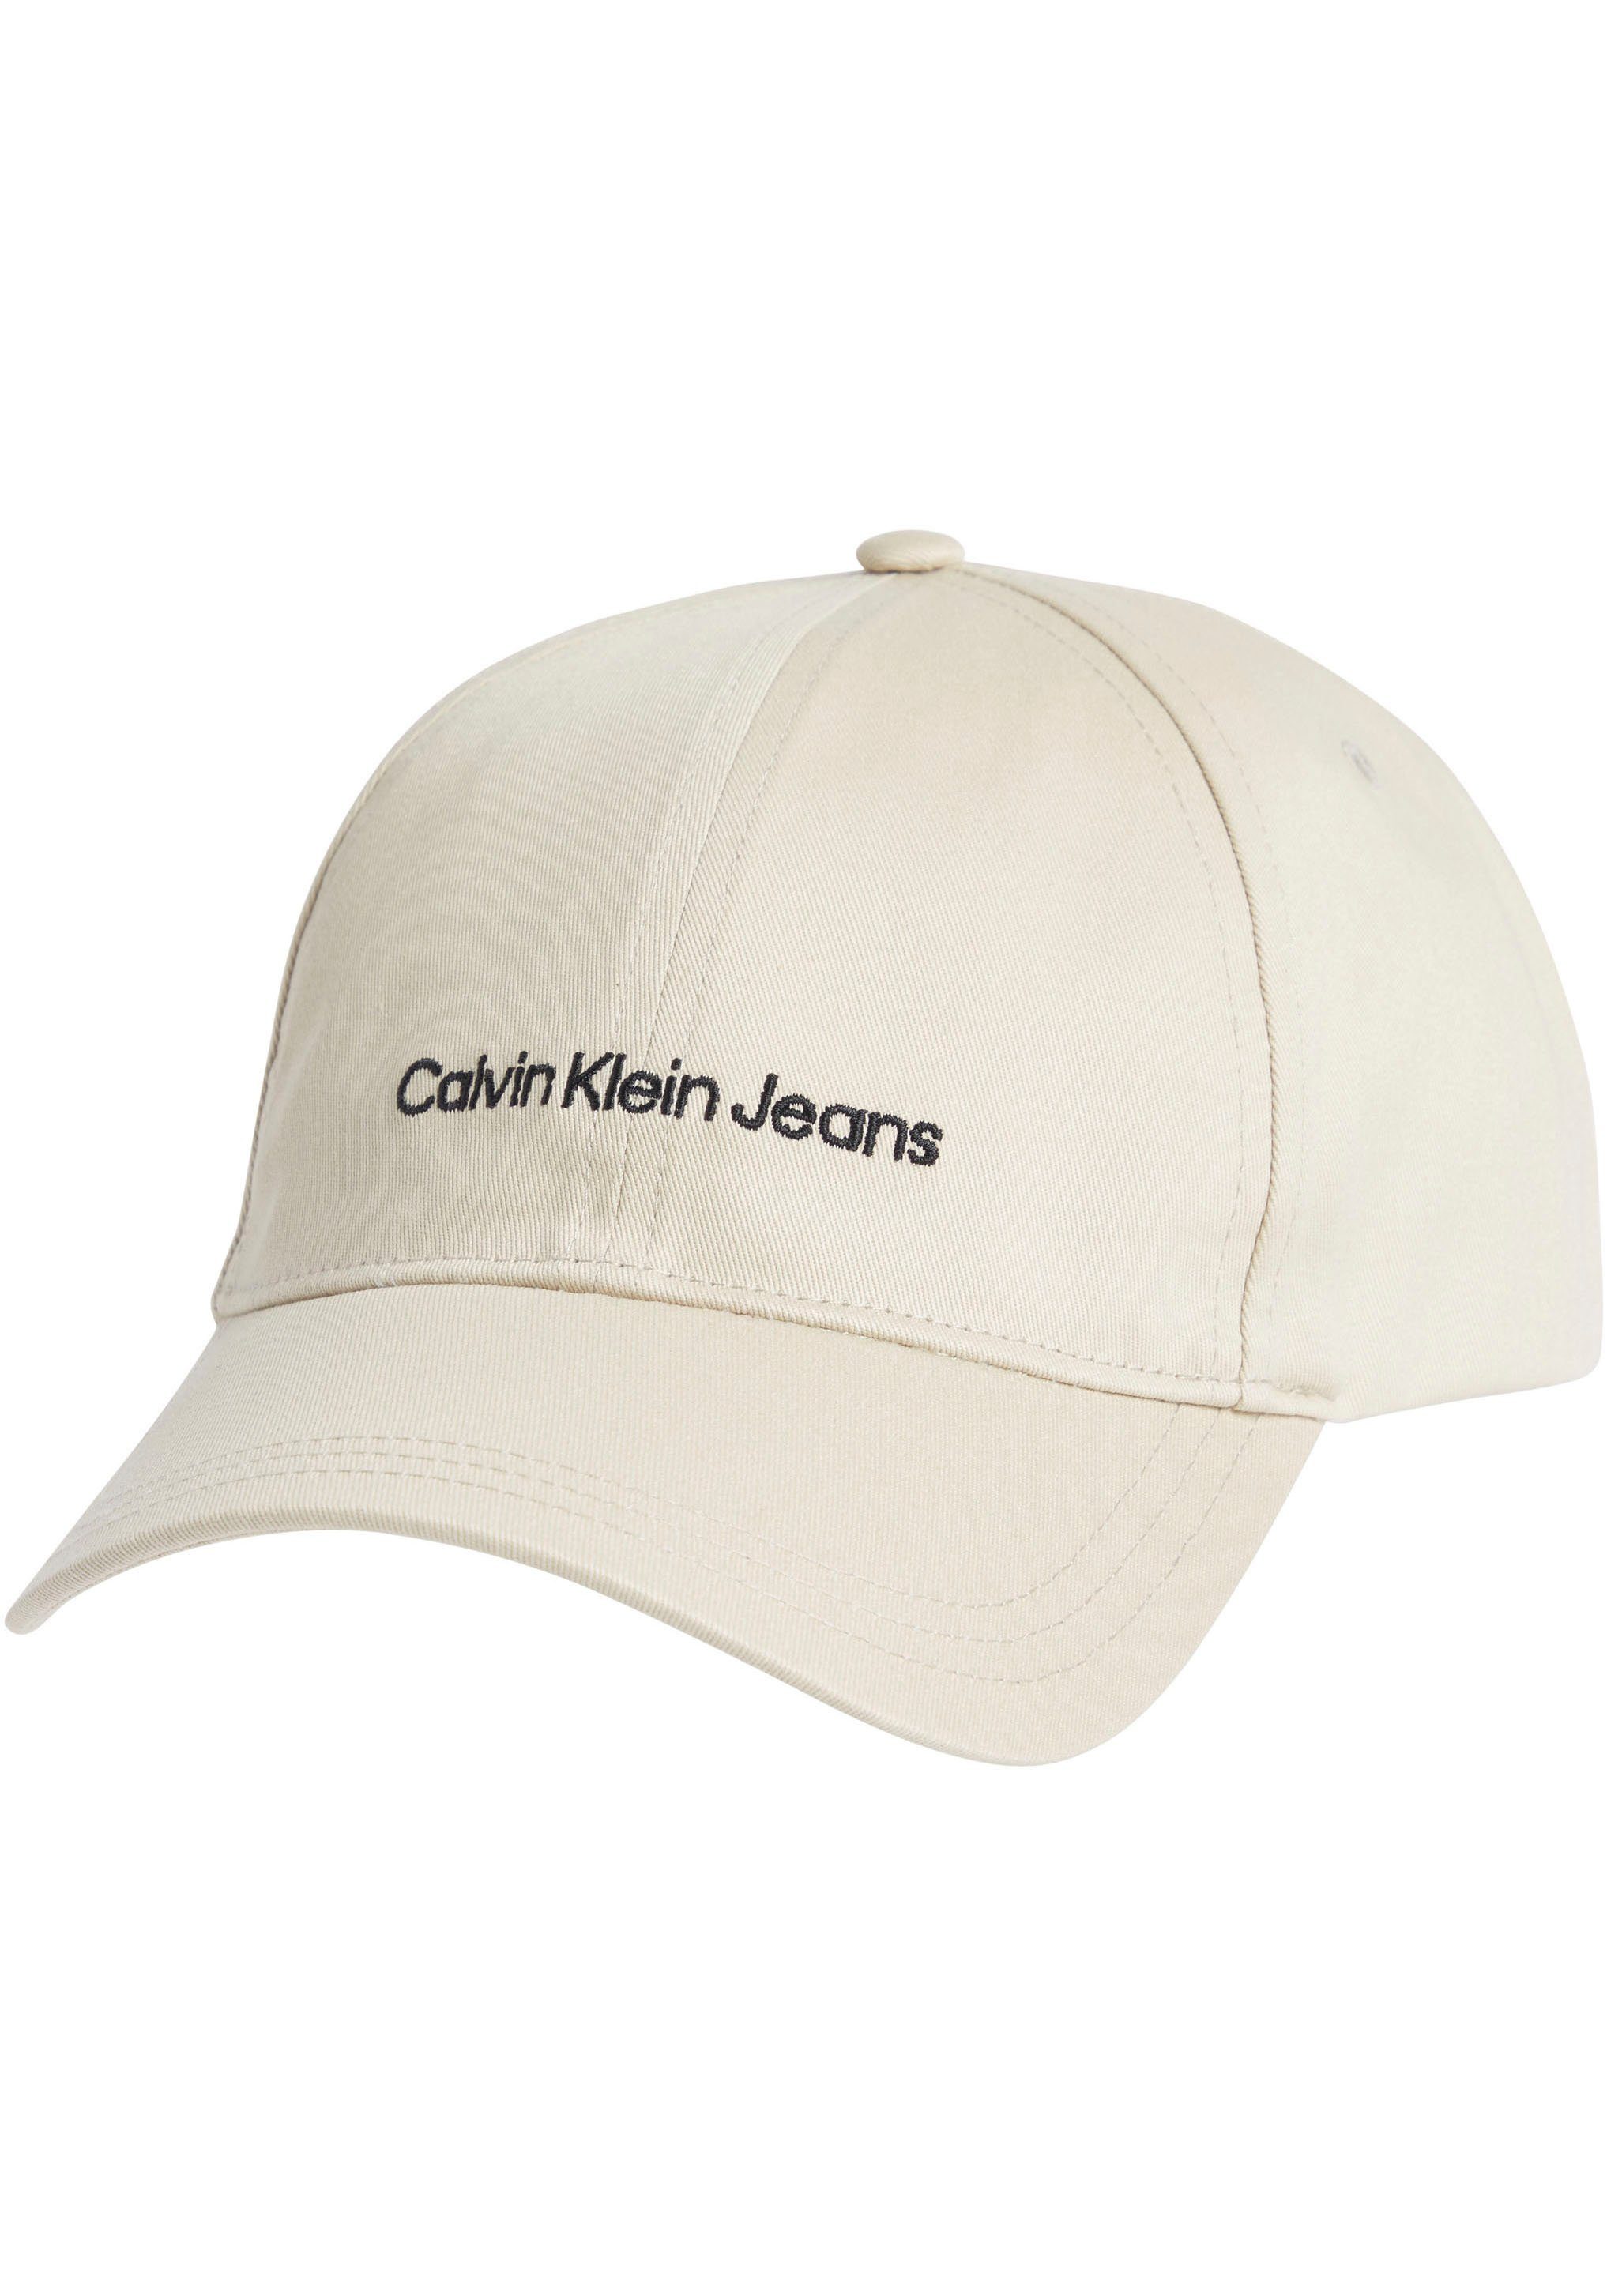 Calvin Klein Jeans Baseball Cap INSTITUTIONAL CAP beige